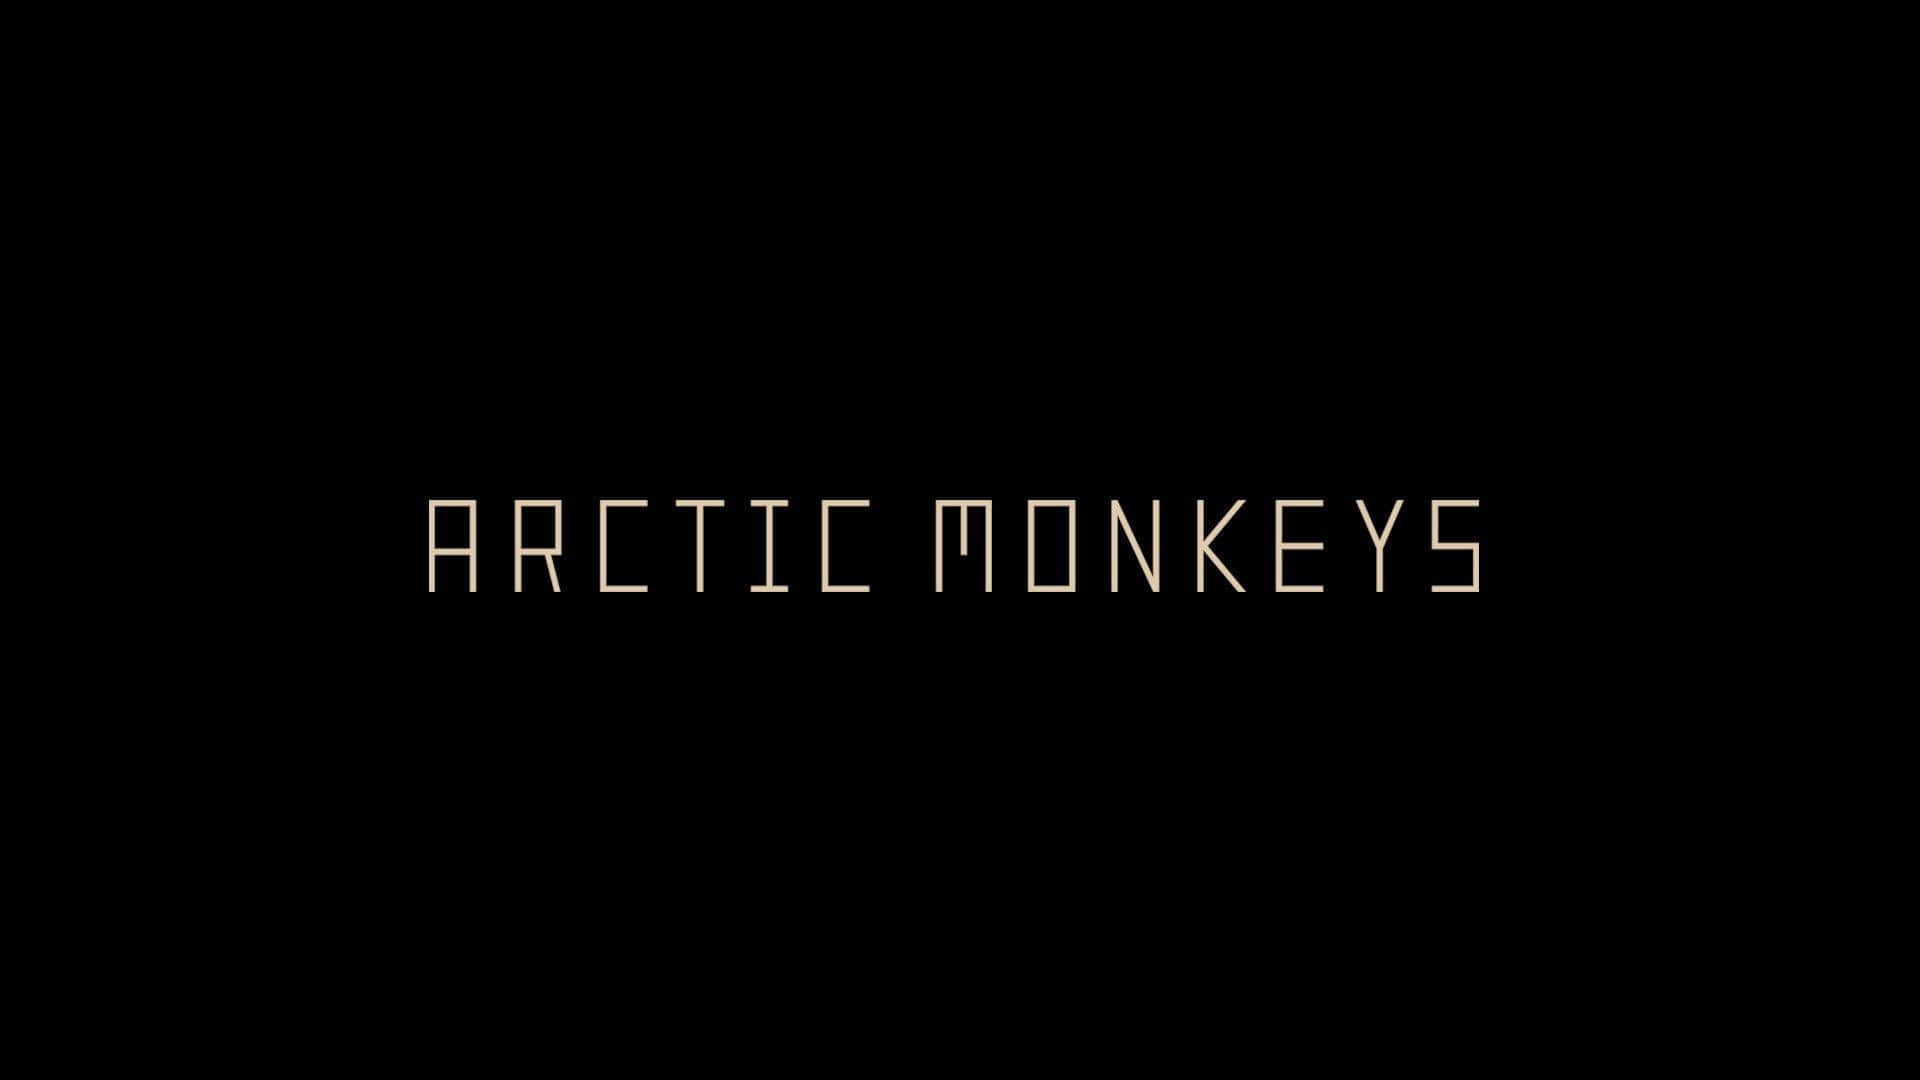 Arctic_ Monkeys_ Band_ Name_ Text Background